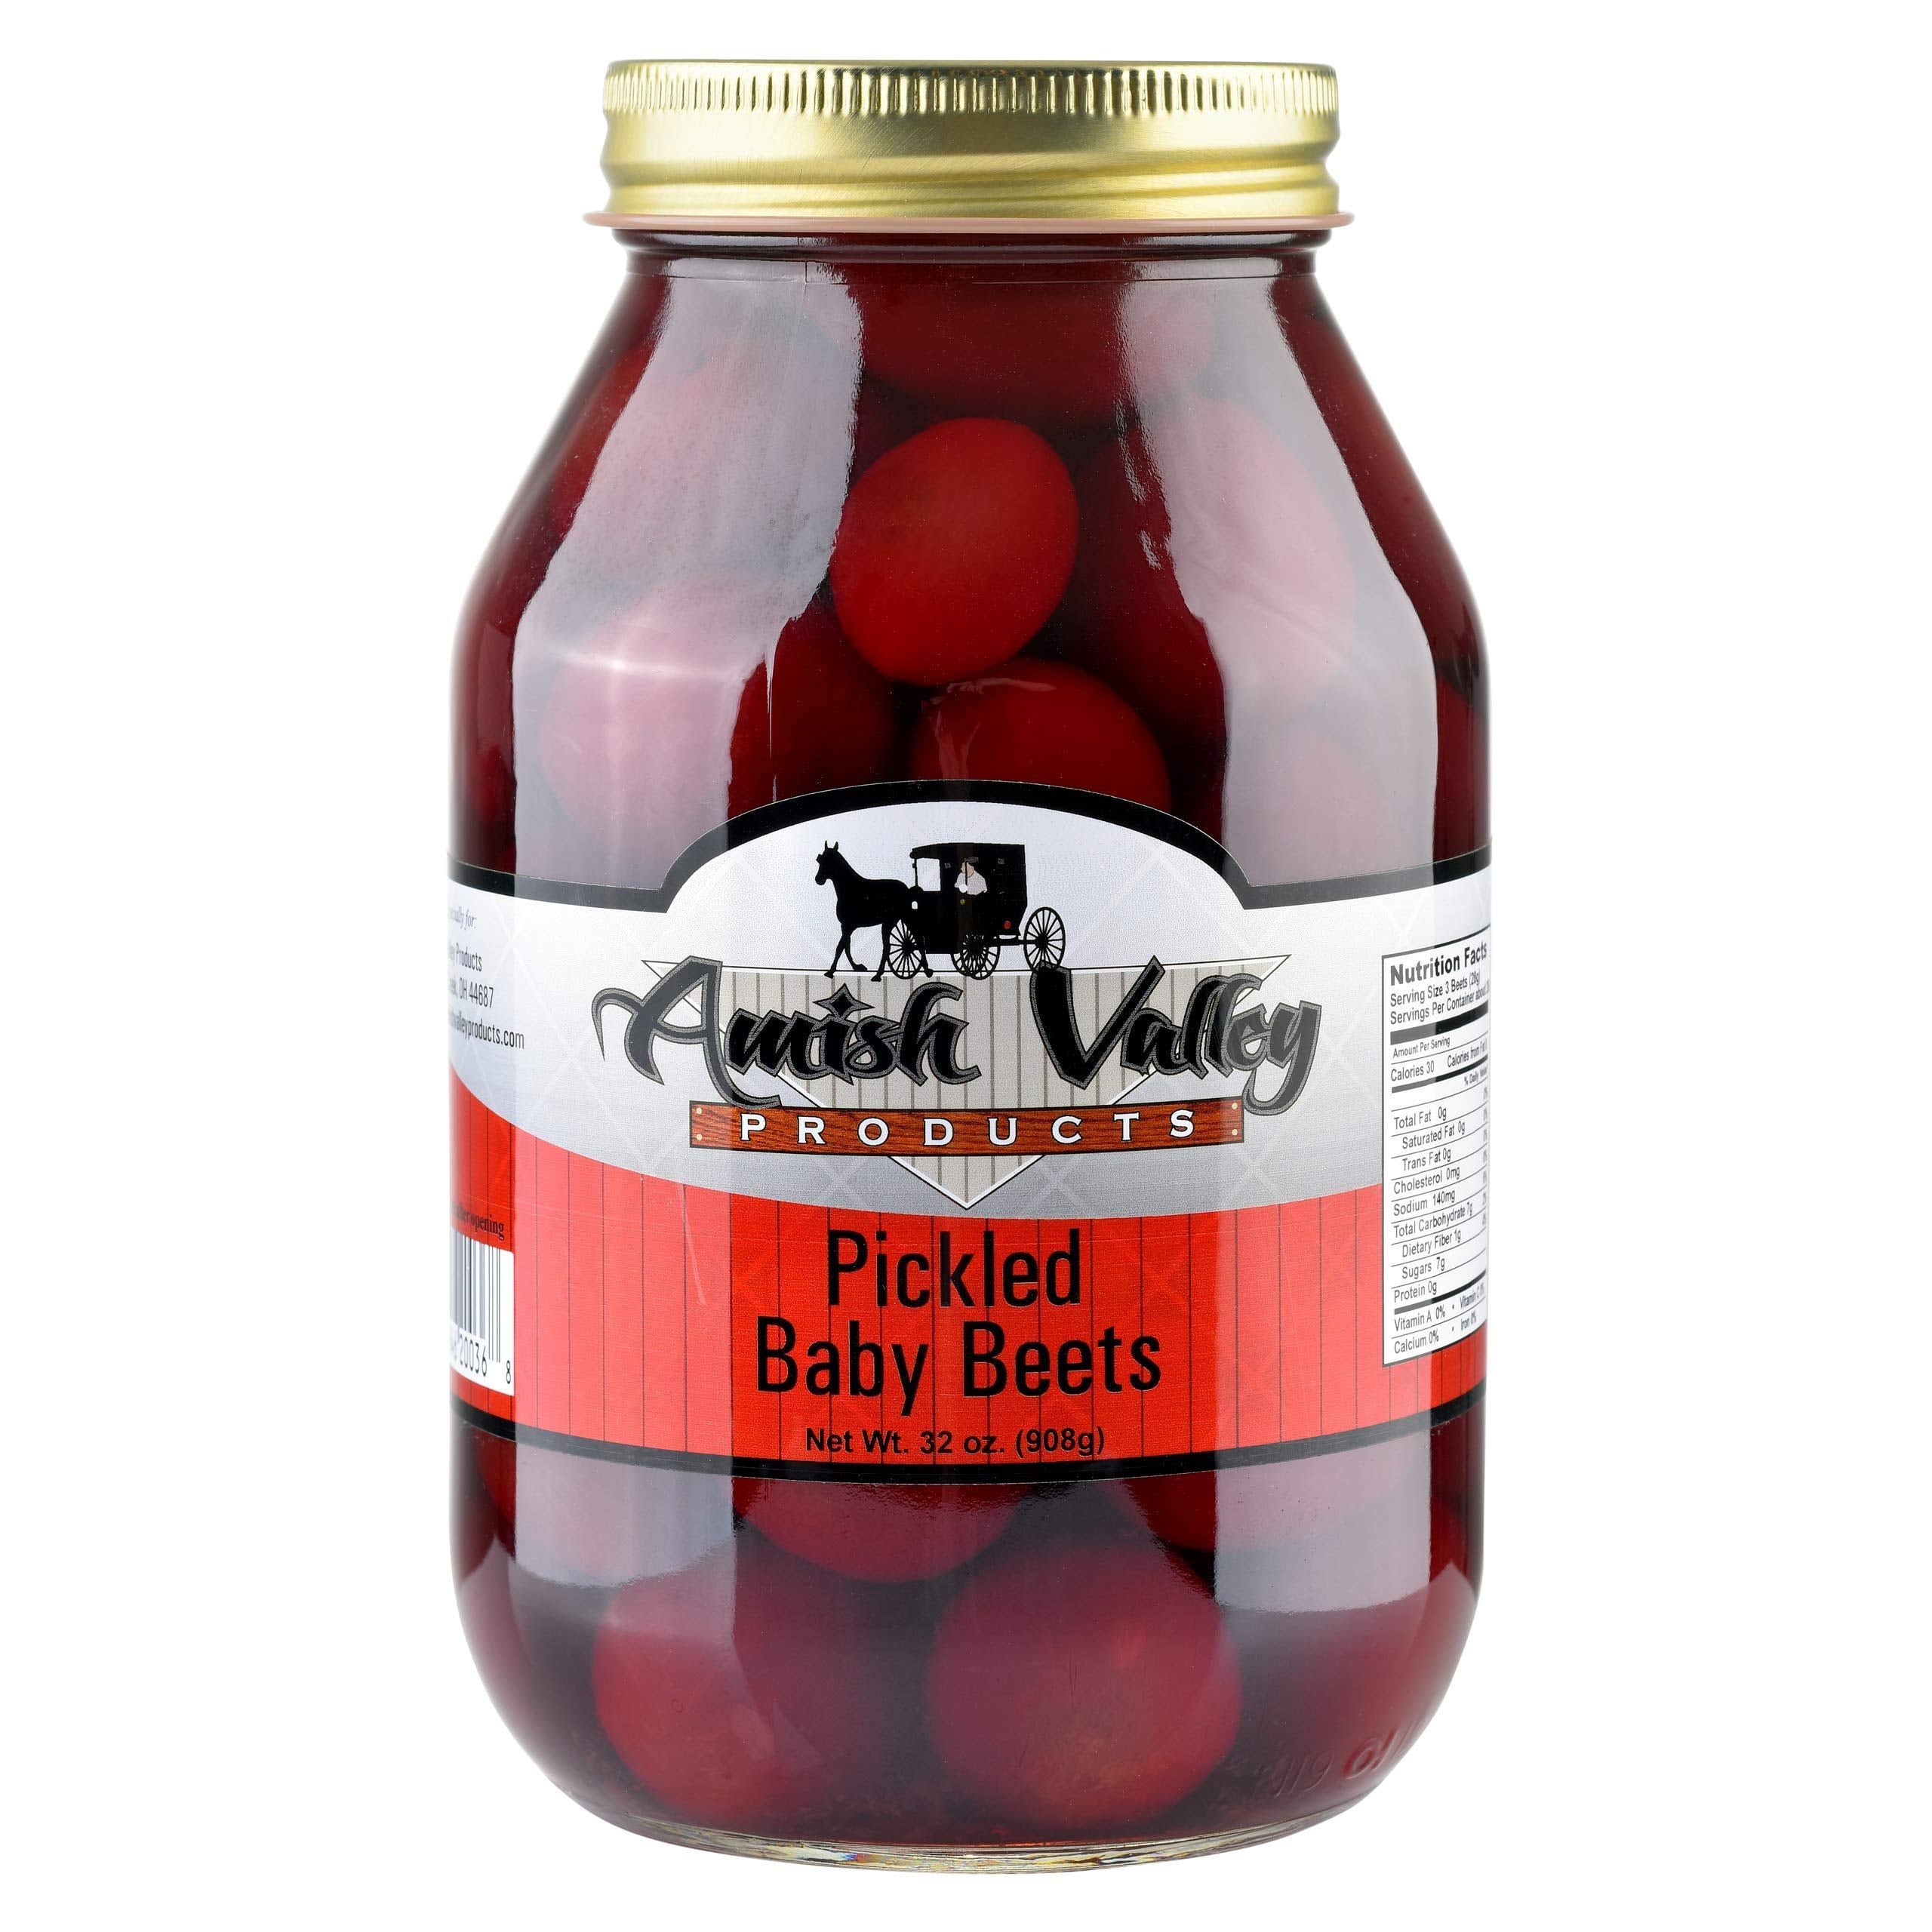 Amish Valley Products Pickled Baby Beets 32oz. Glass Jar (1 Quart Jar - 32 oz)